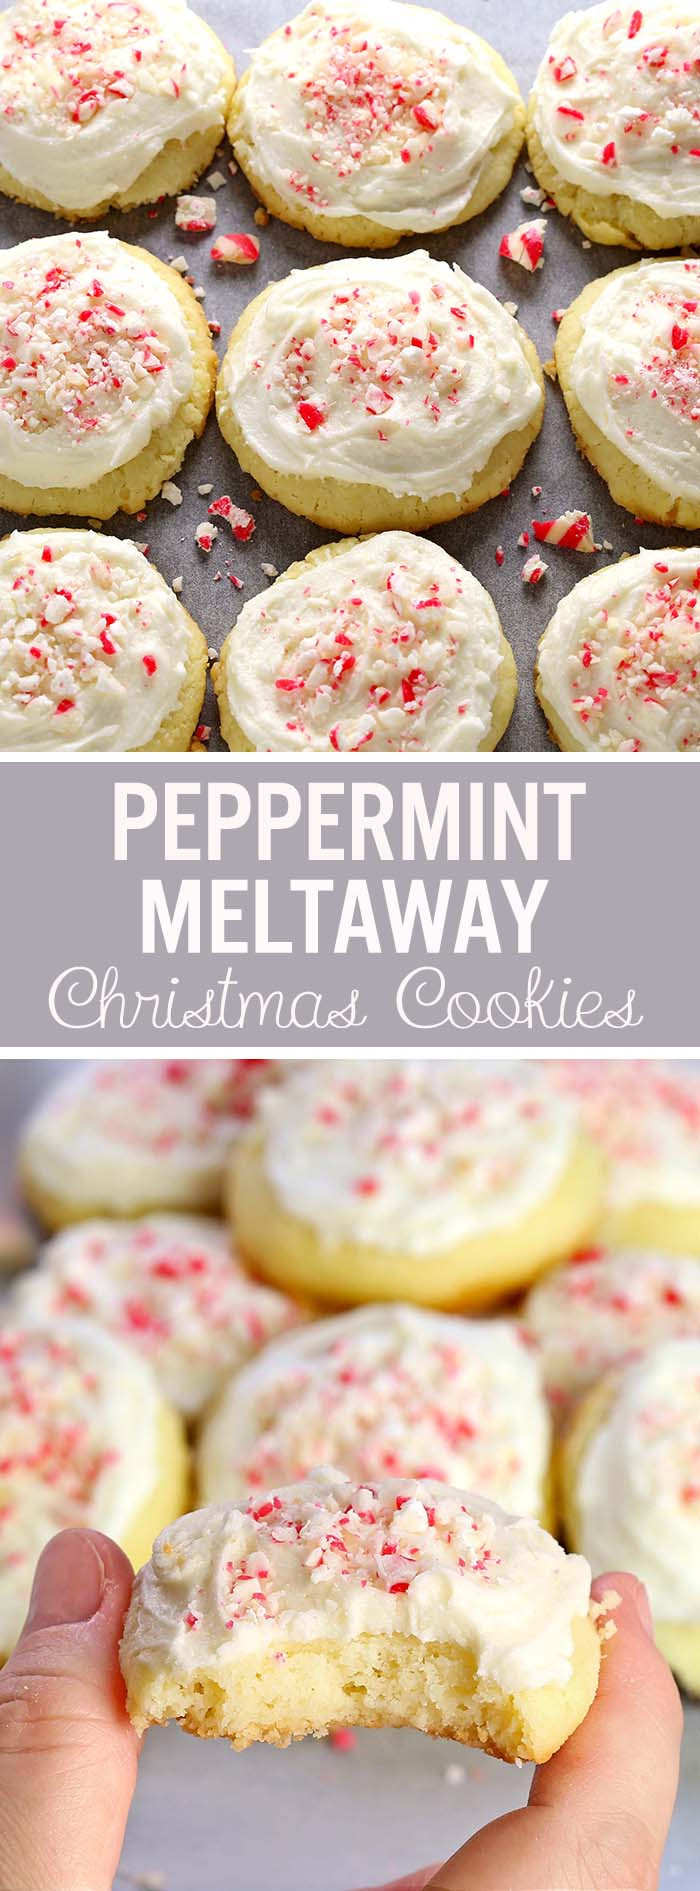 Christmas Meltaway Cookies
 Peppermint Meltaway Cookies Cakescottage